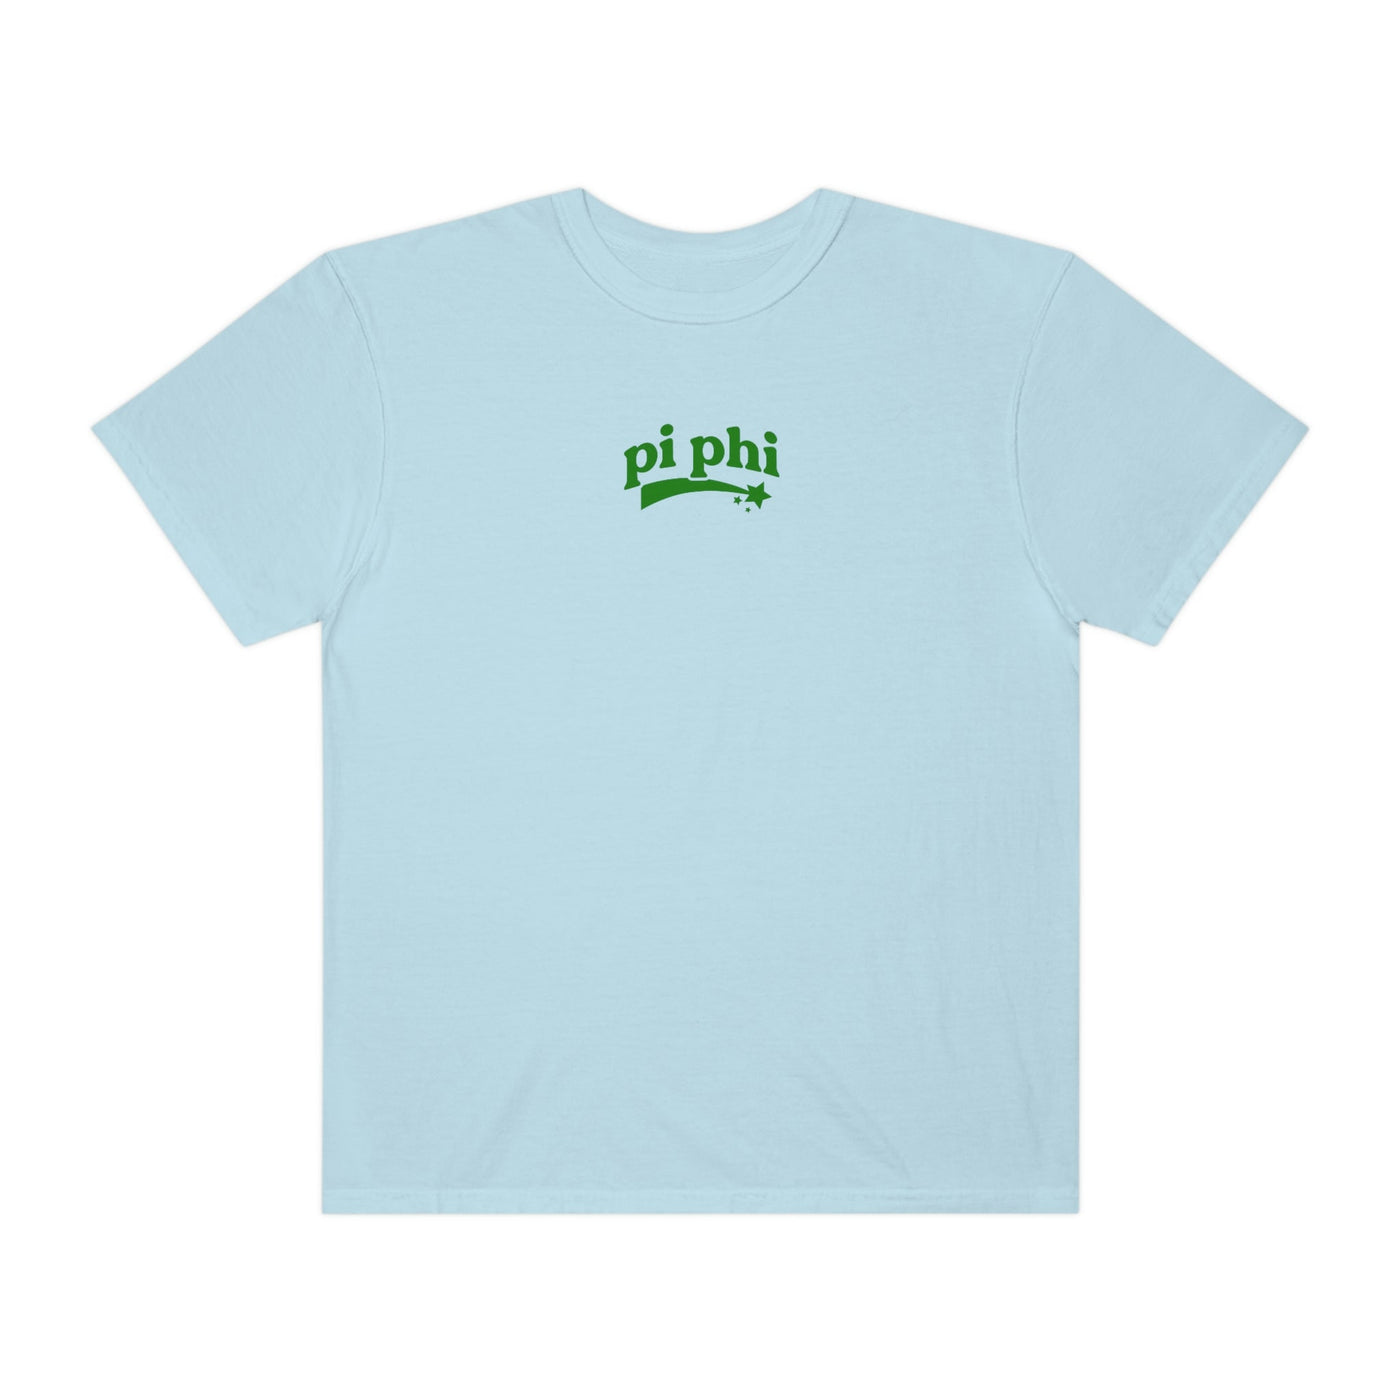 Pi Beta Phi Planet T-shirt | Be Kind to the Planet Trendy Sorority shirt